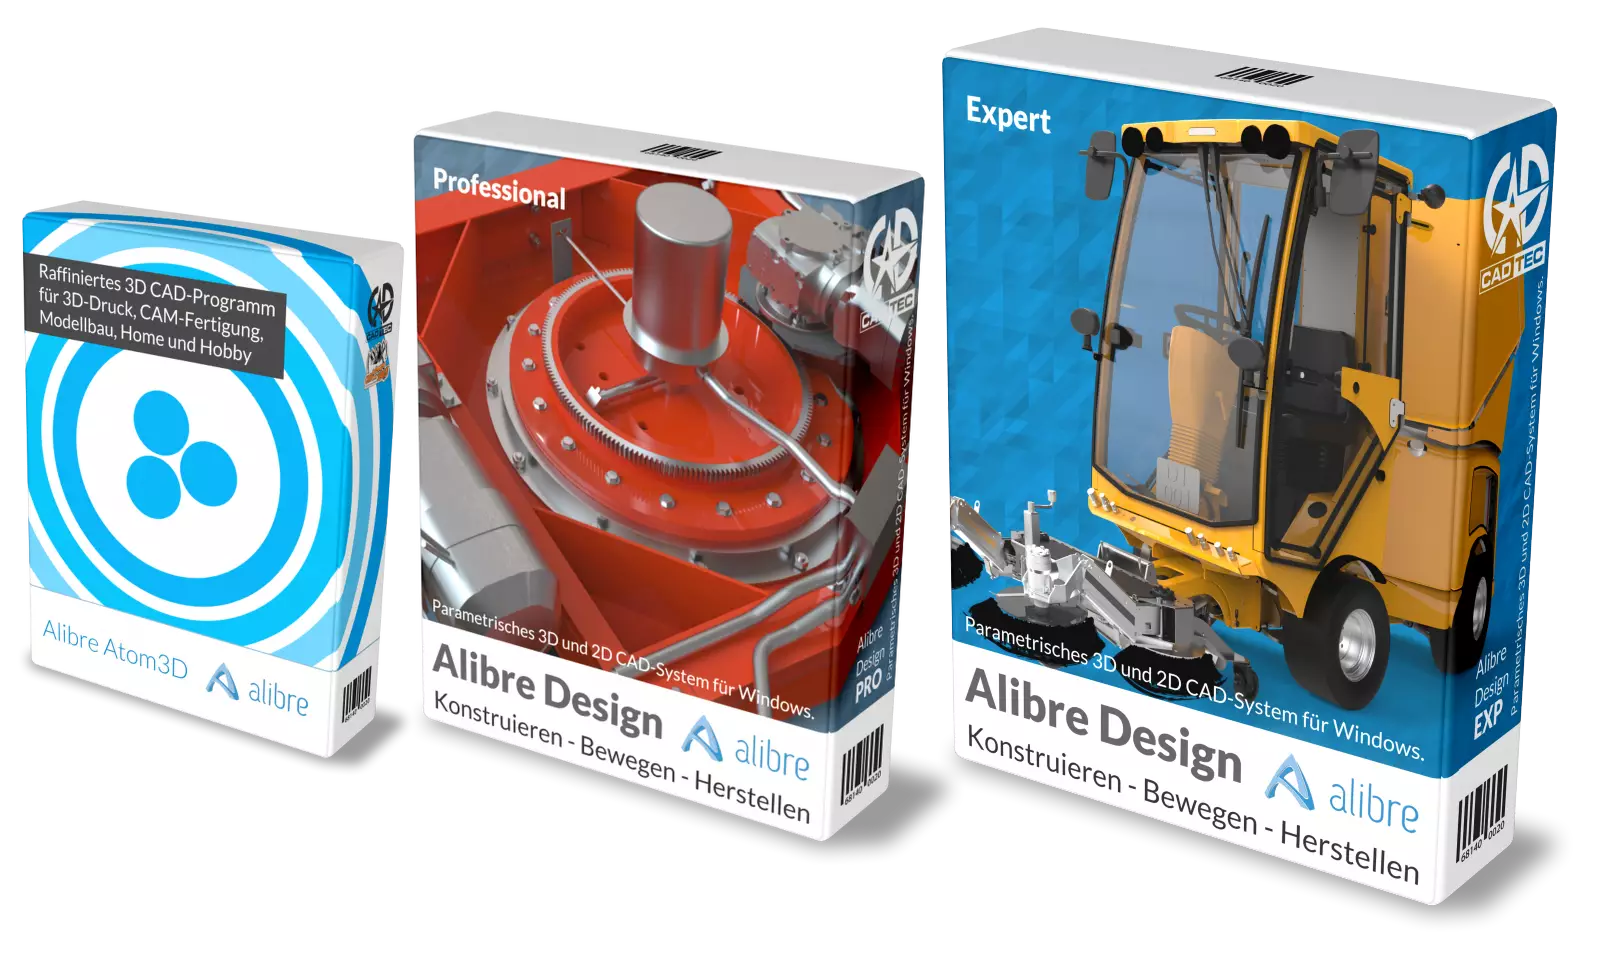 Alibre Atom3D, Alibre Design Professional, Alibre Design Expert